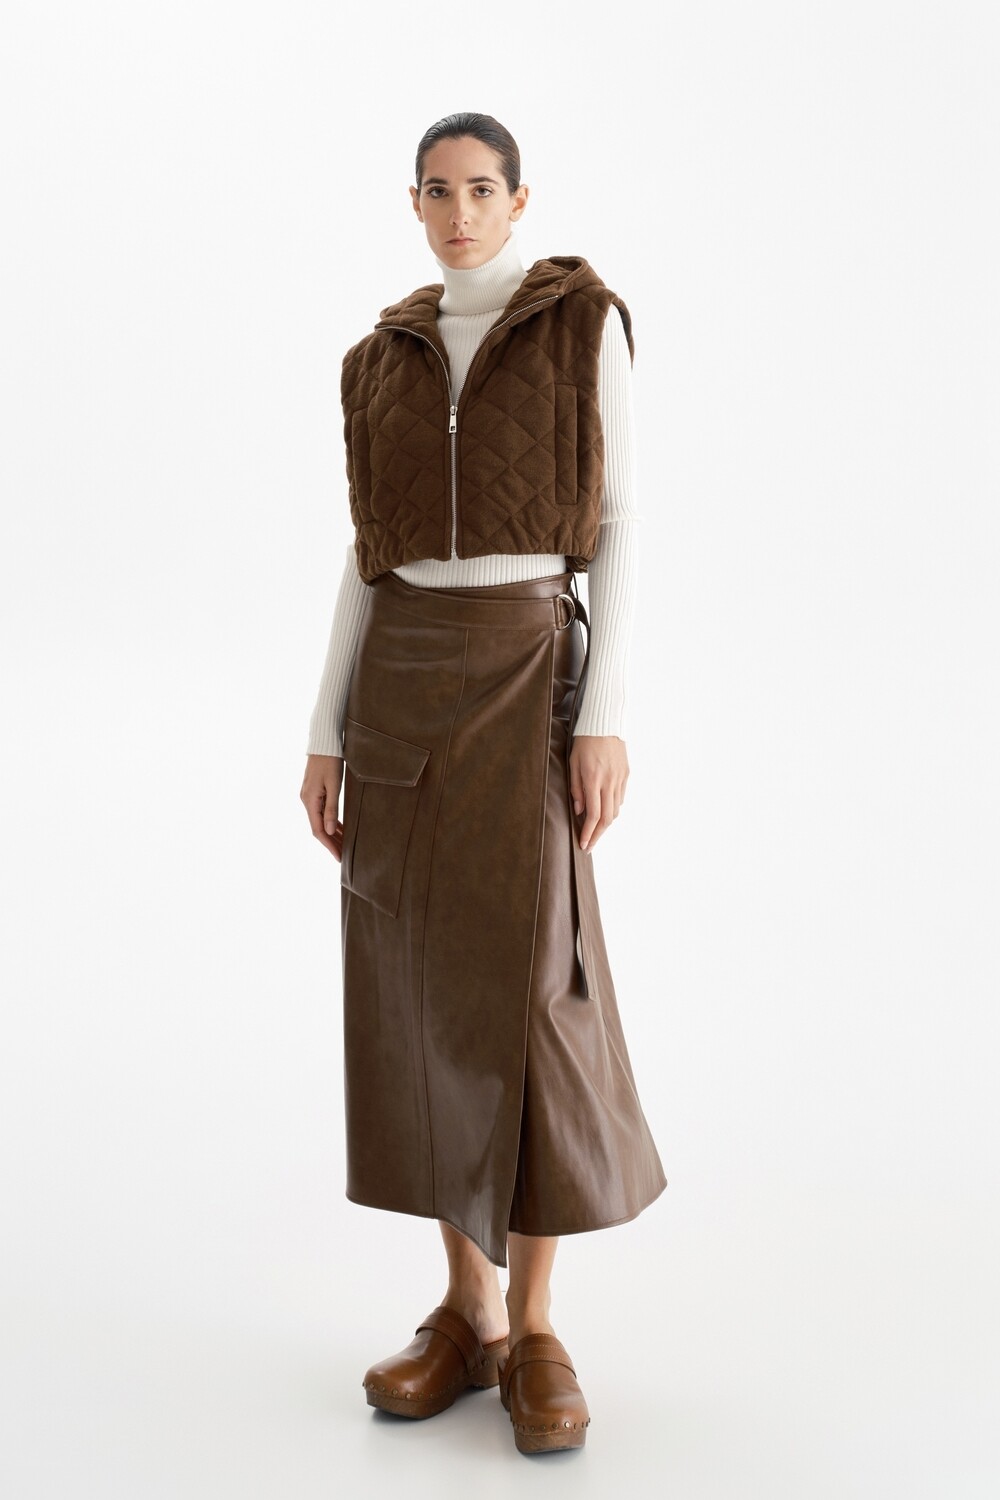 "Emilia" Eco-Leather Skirt